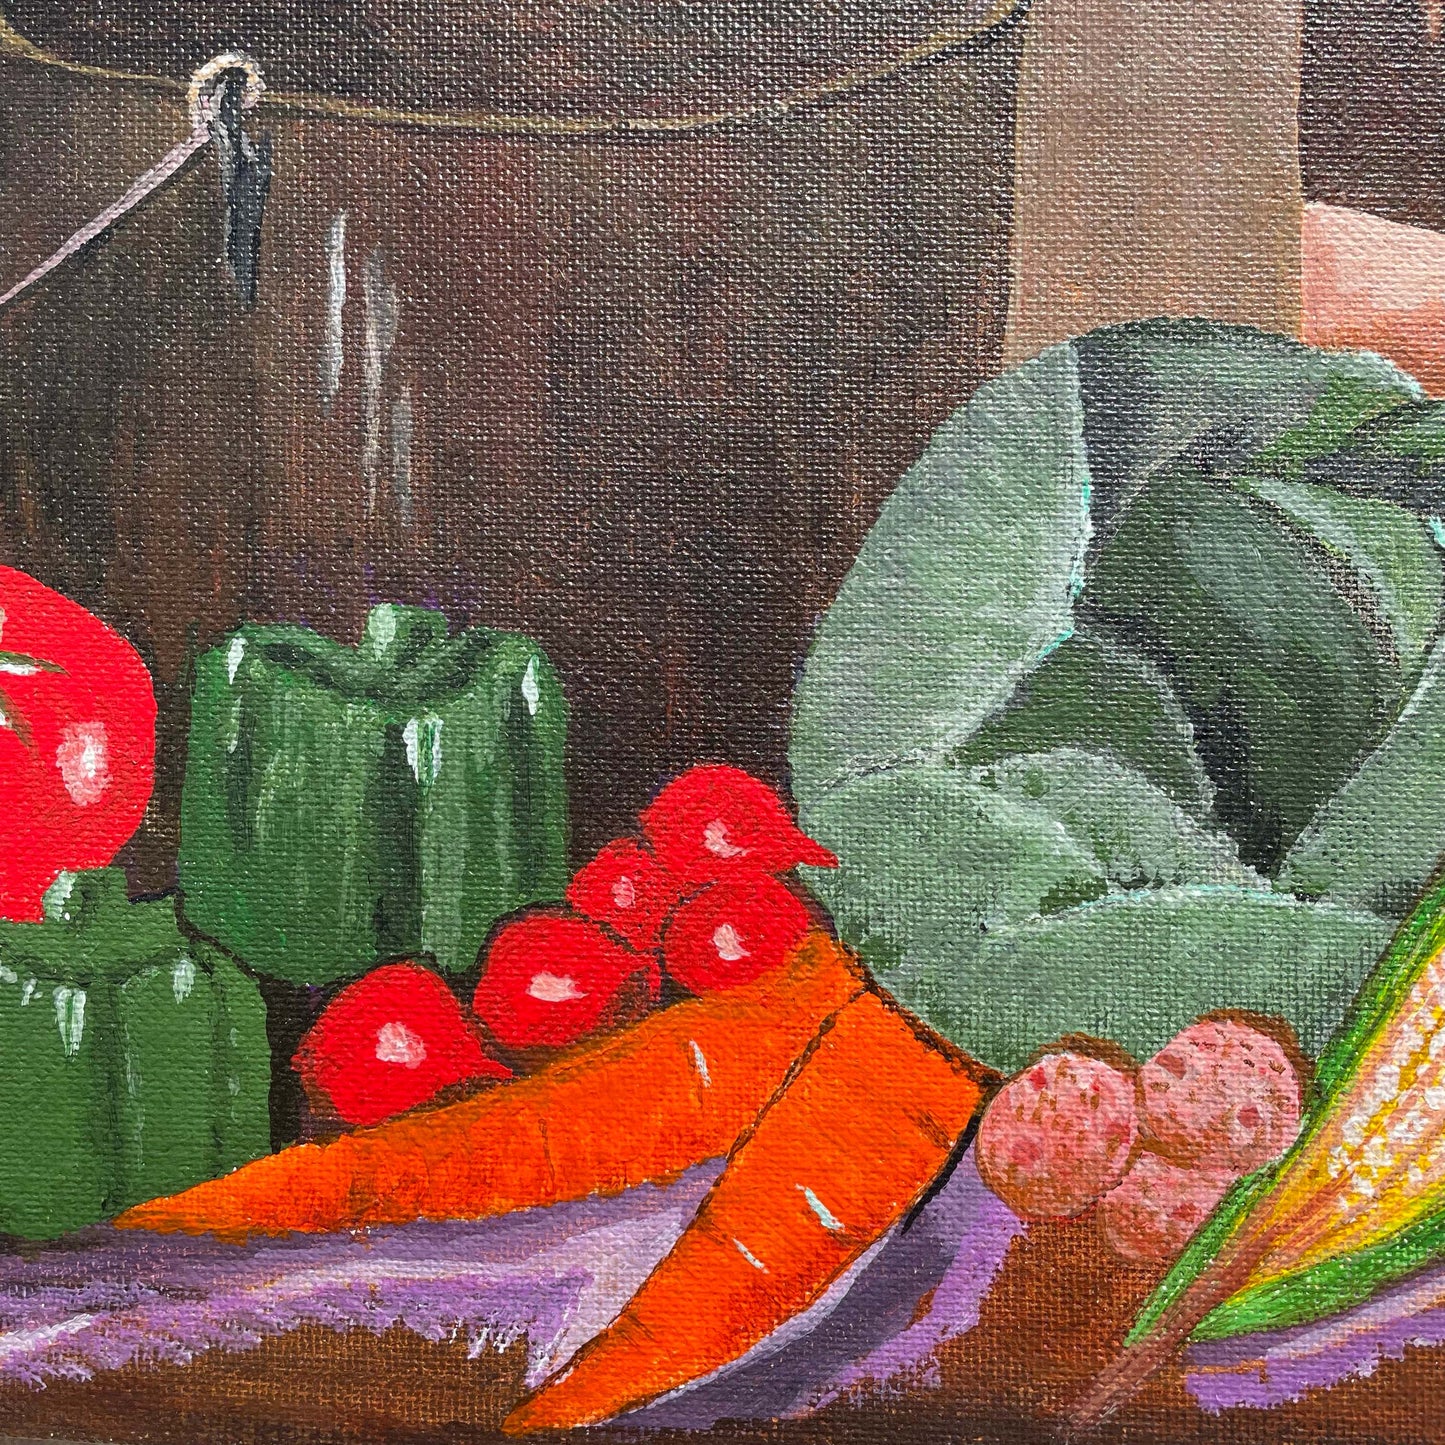 Still Life: Vegetables and More - Original Artwork